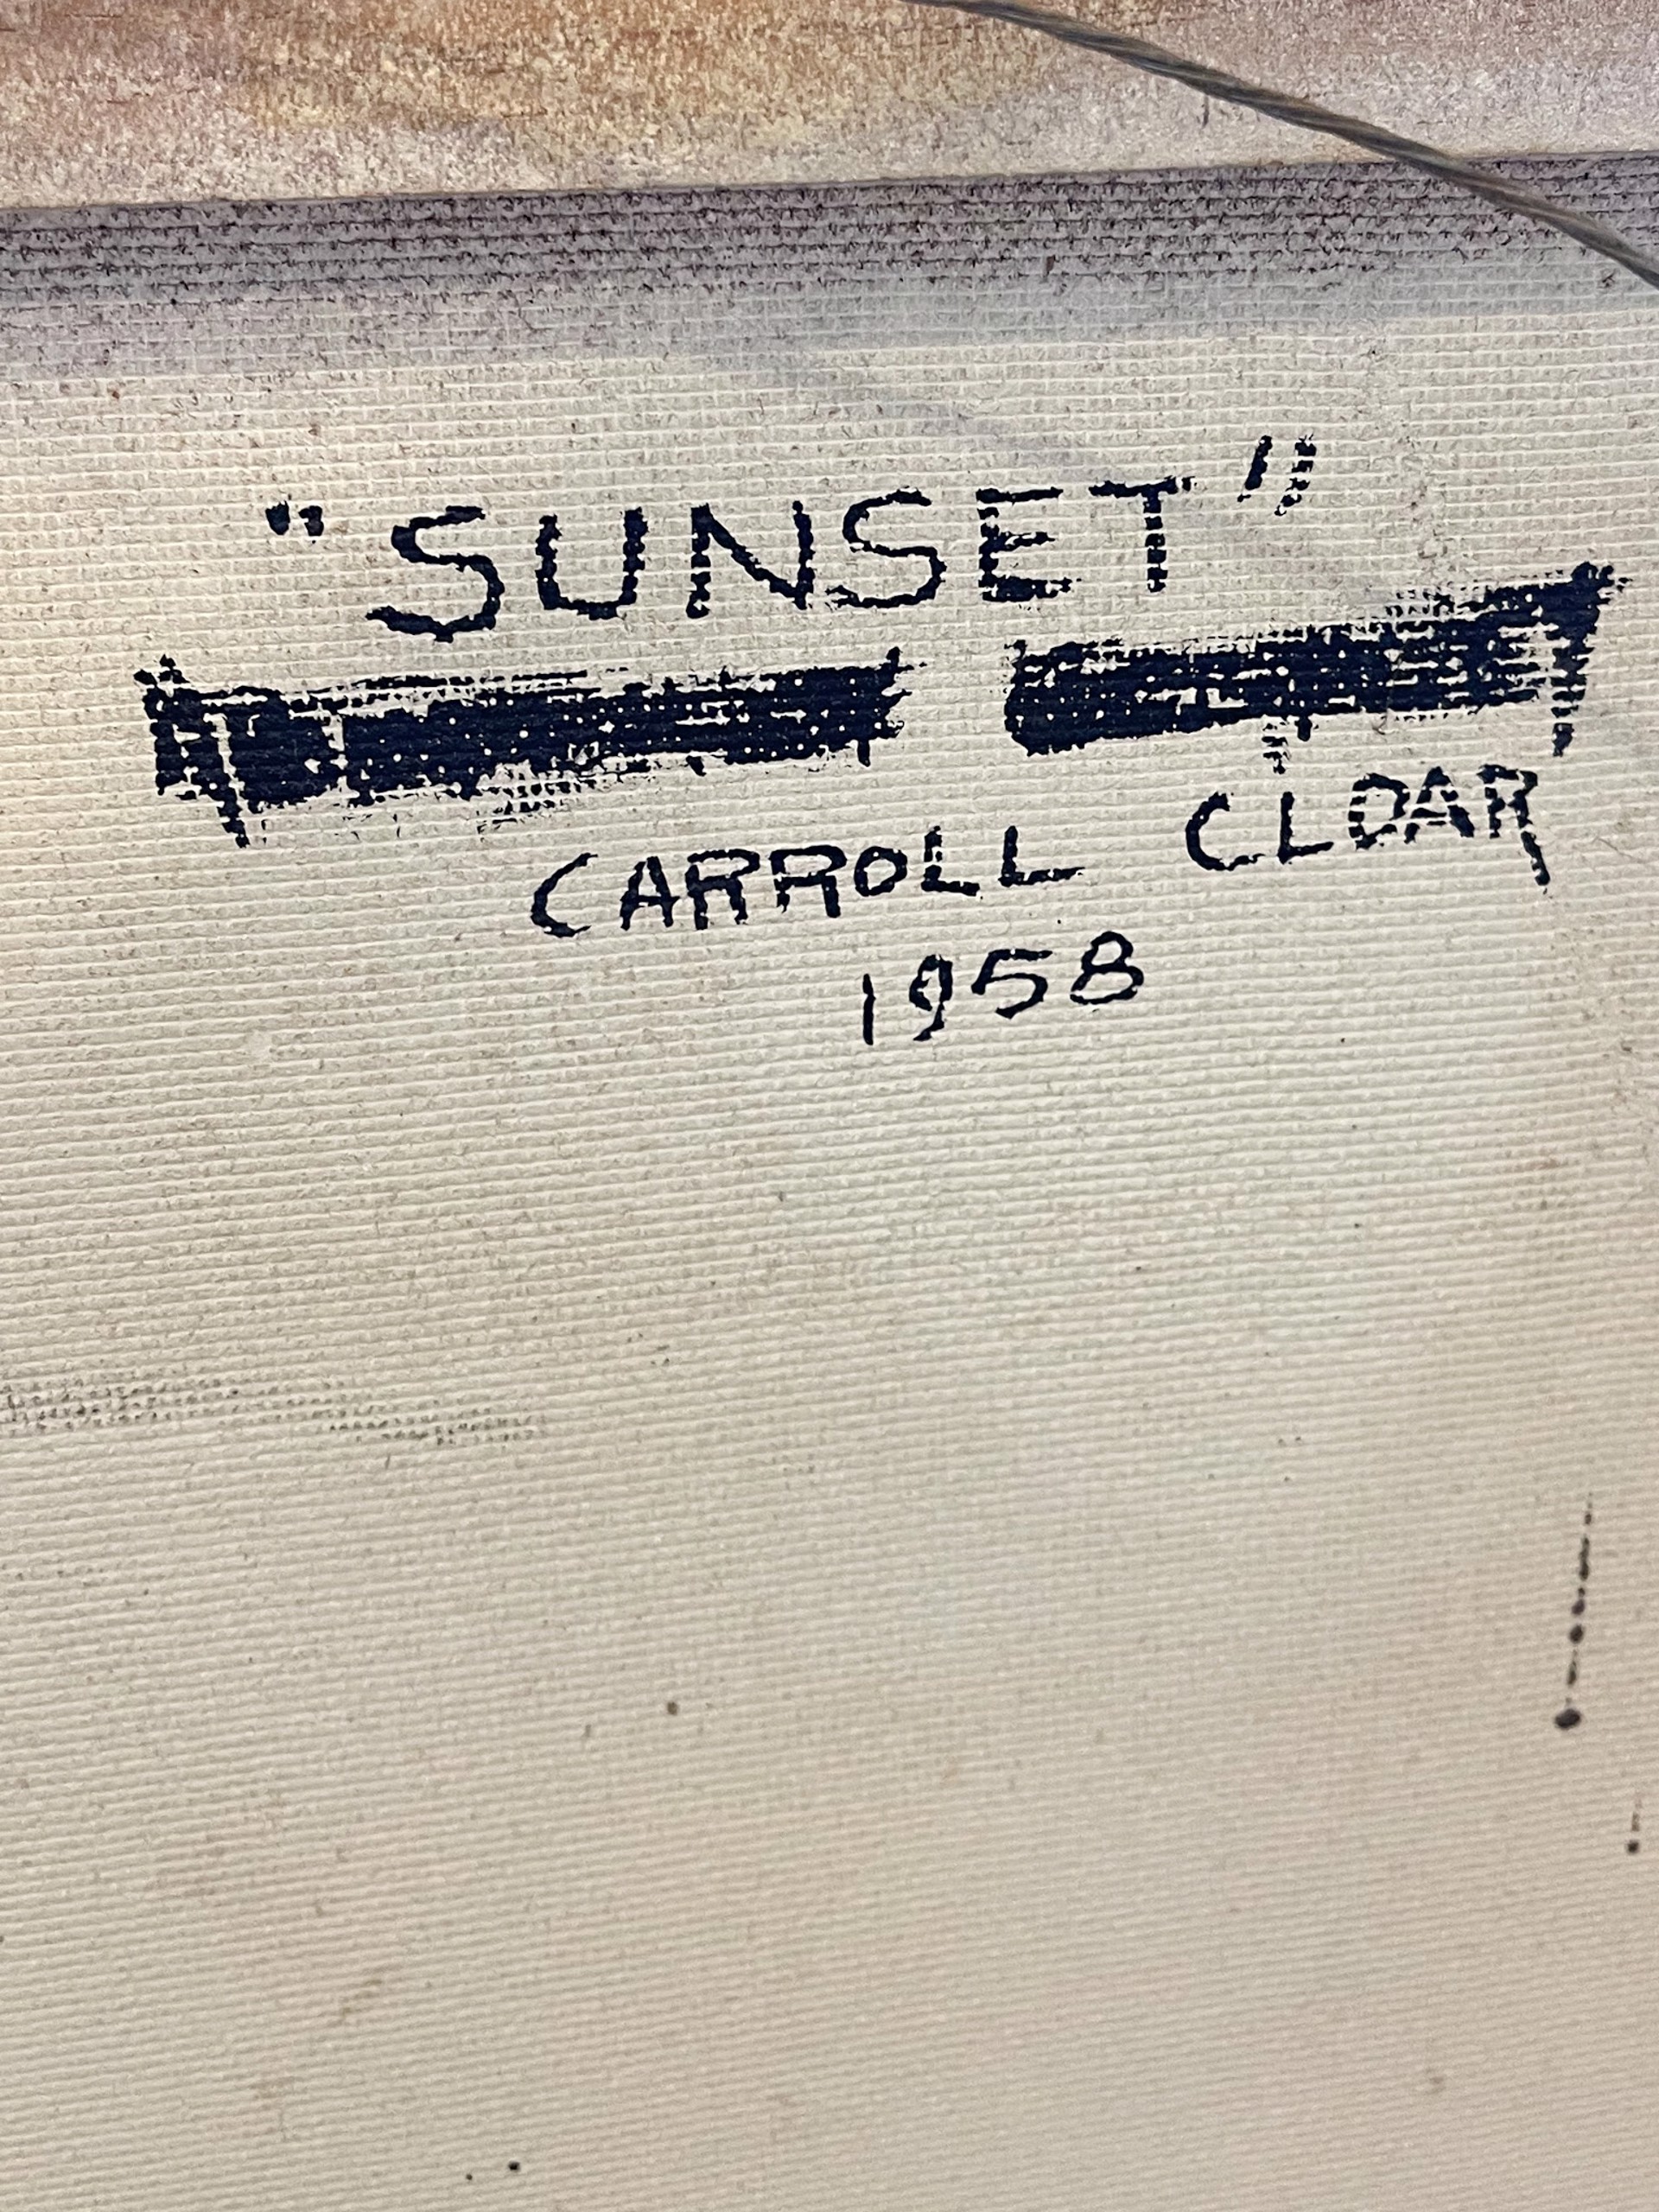 Sunset by Carroll Cloar